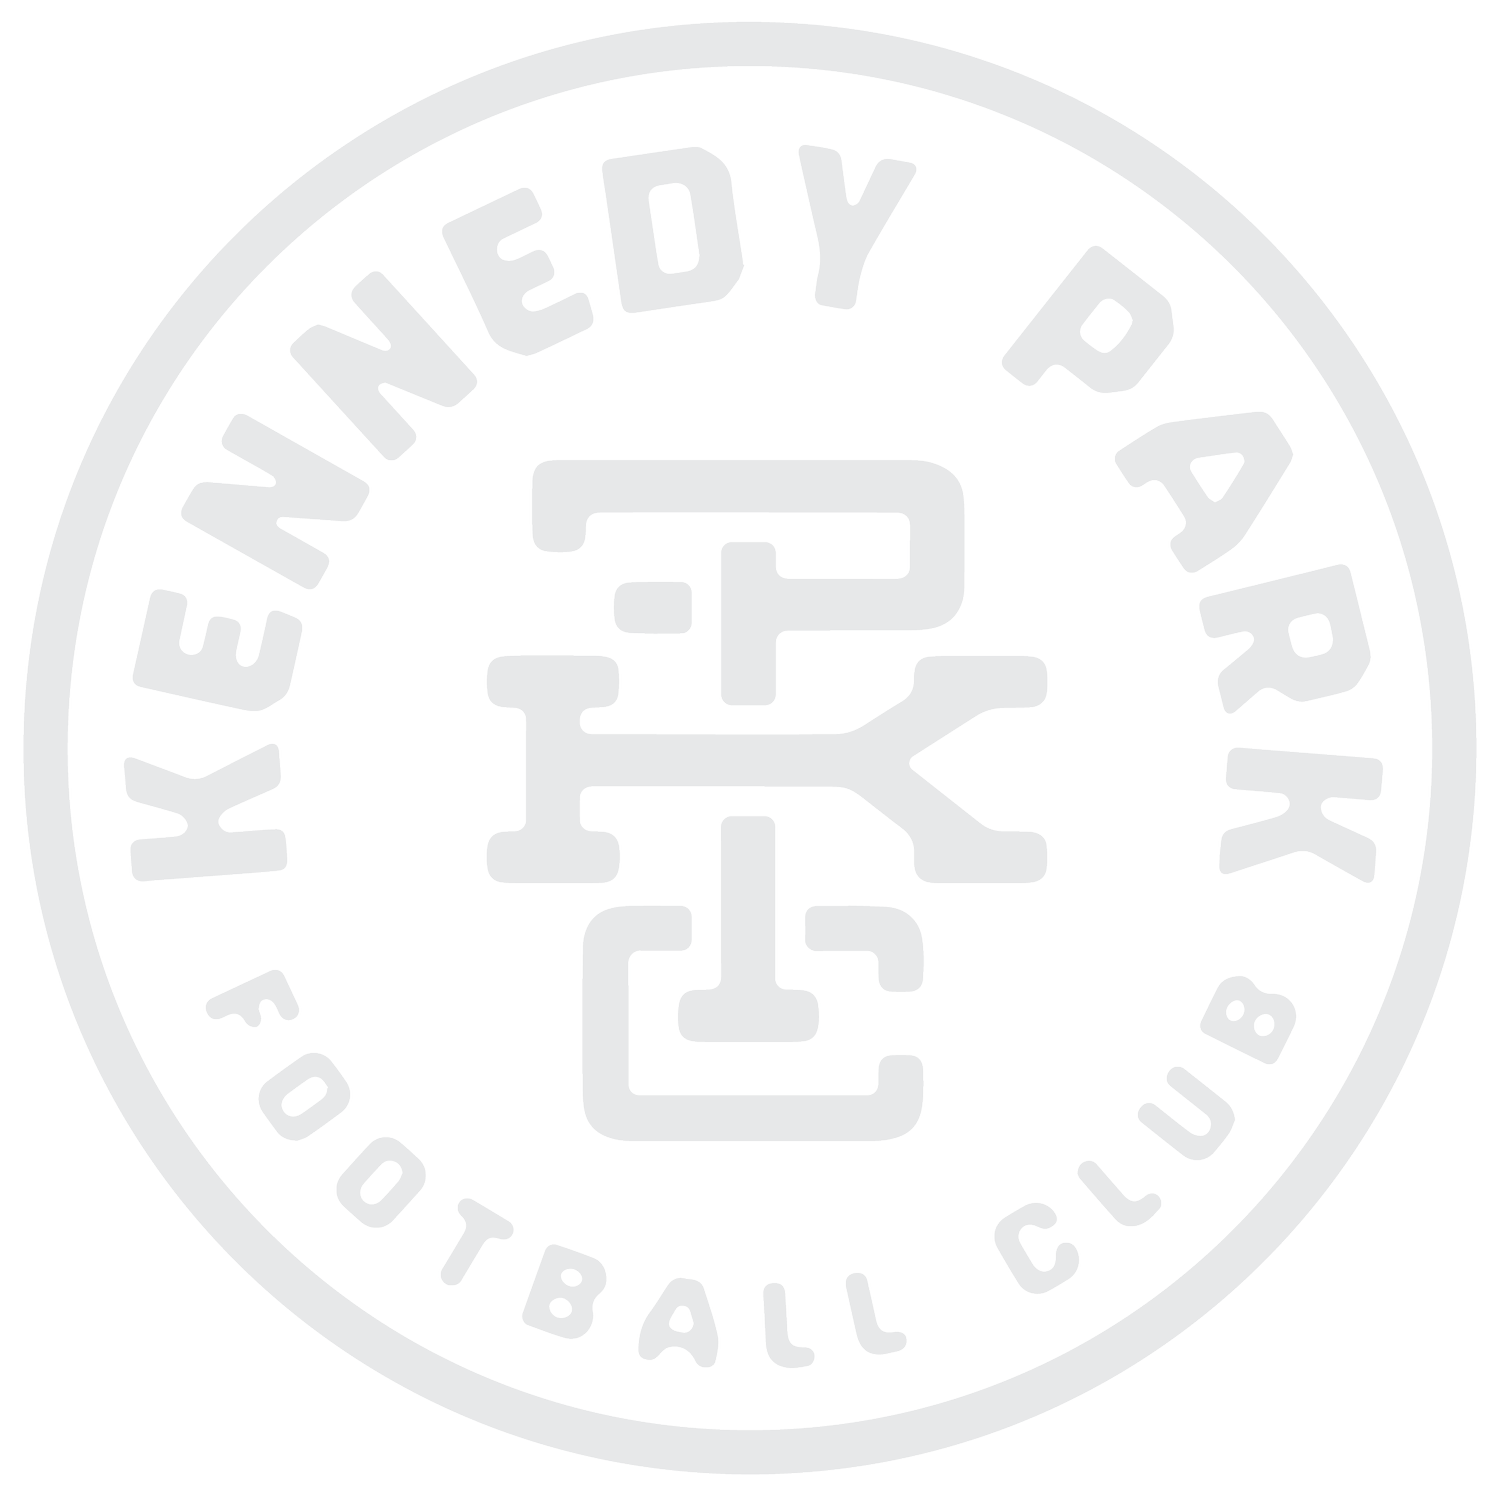 Kennedy Park Football Club